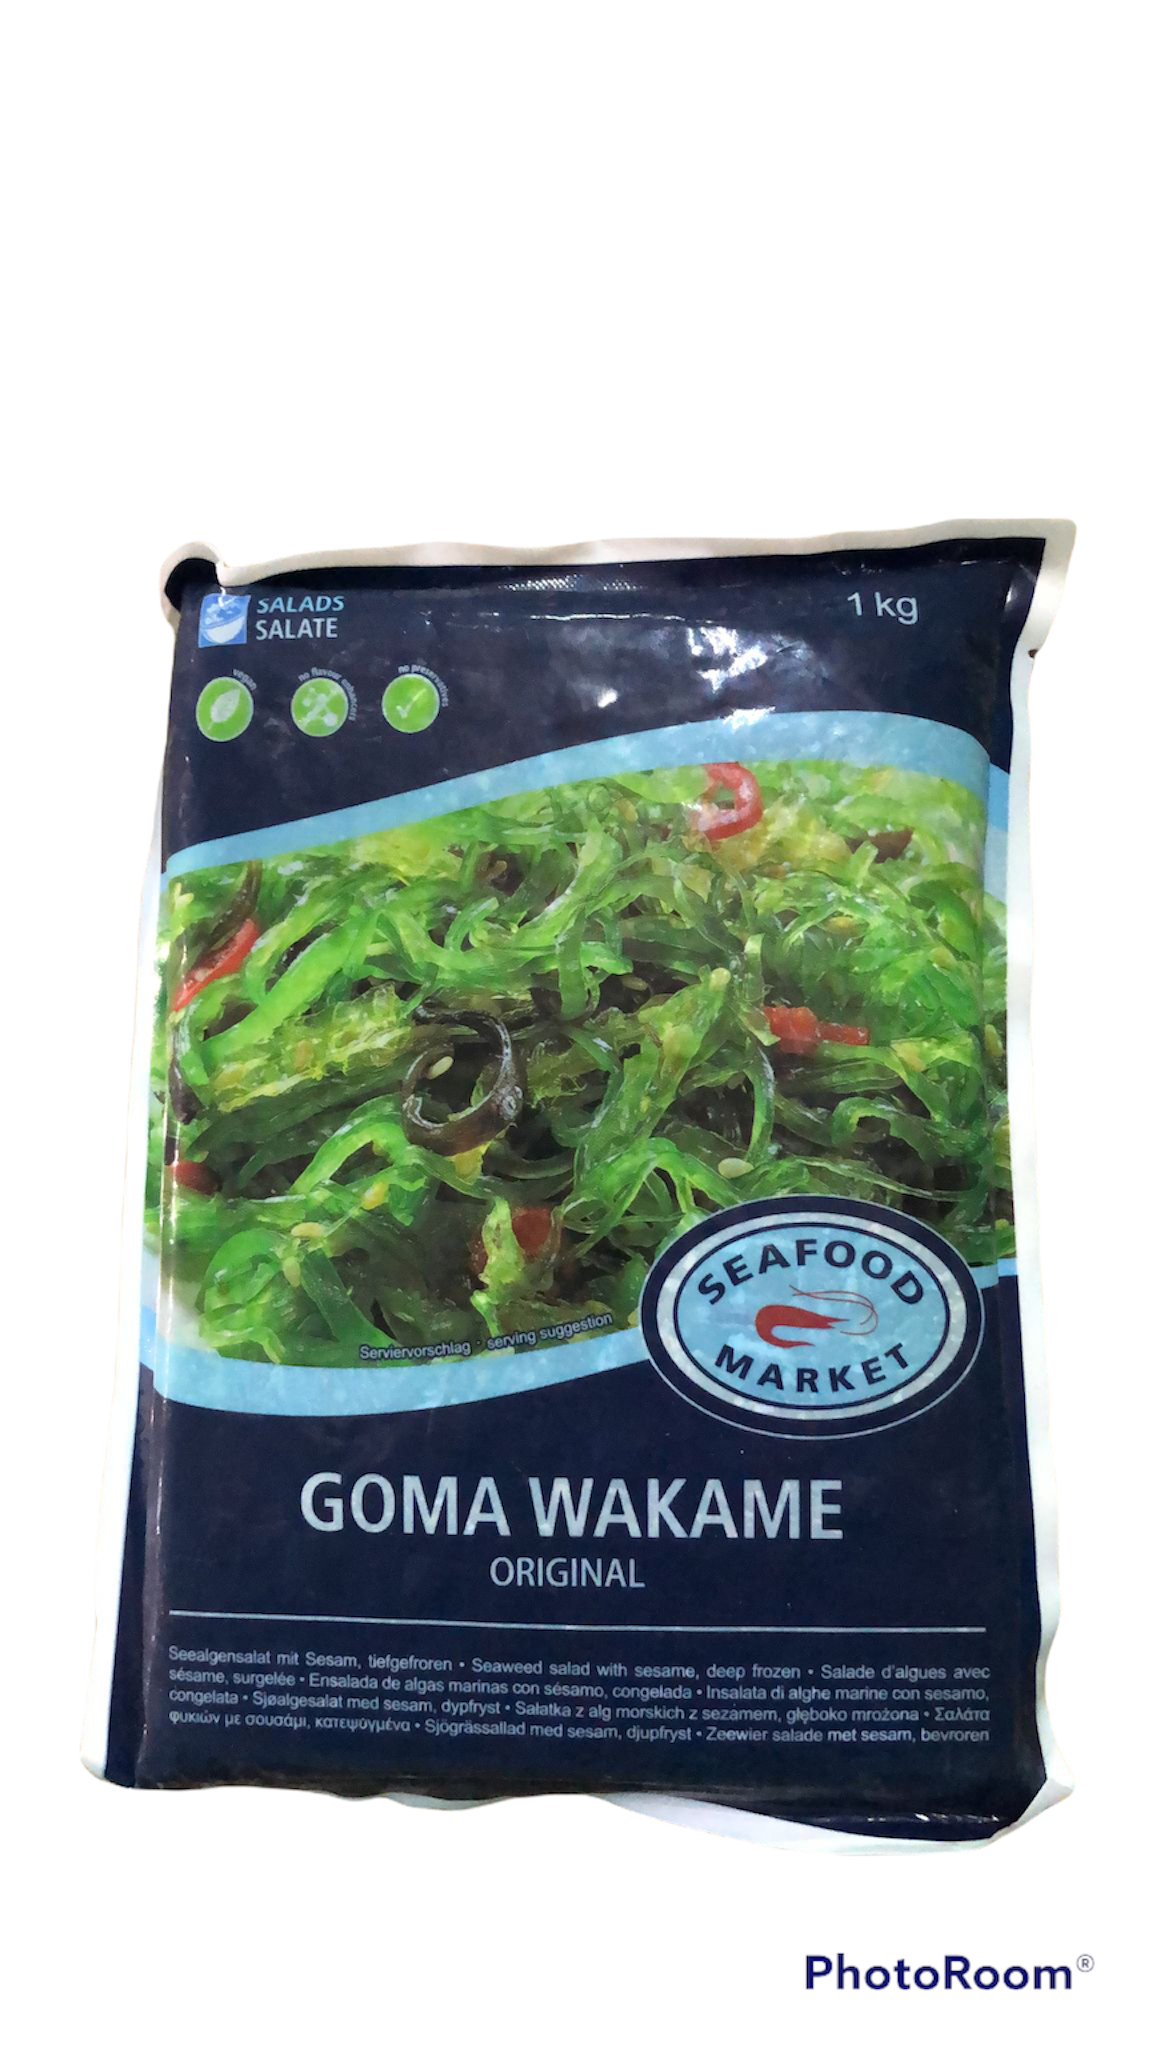 Goma Wakame Original - Salat rong biển 1kg Seafood Market